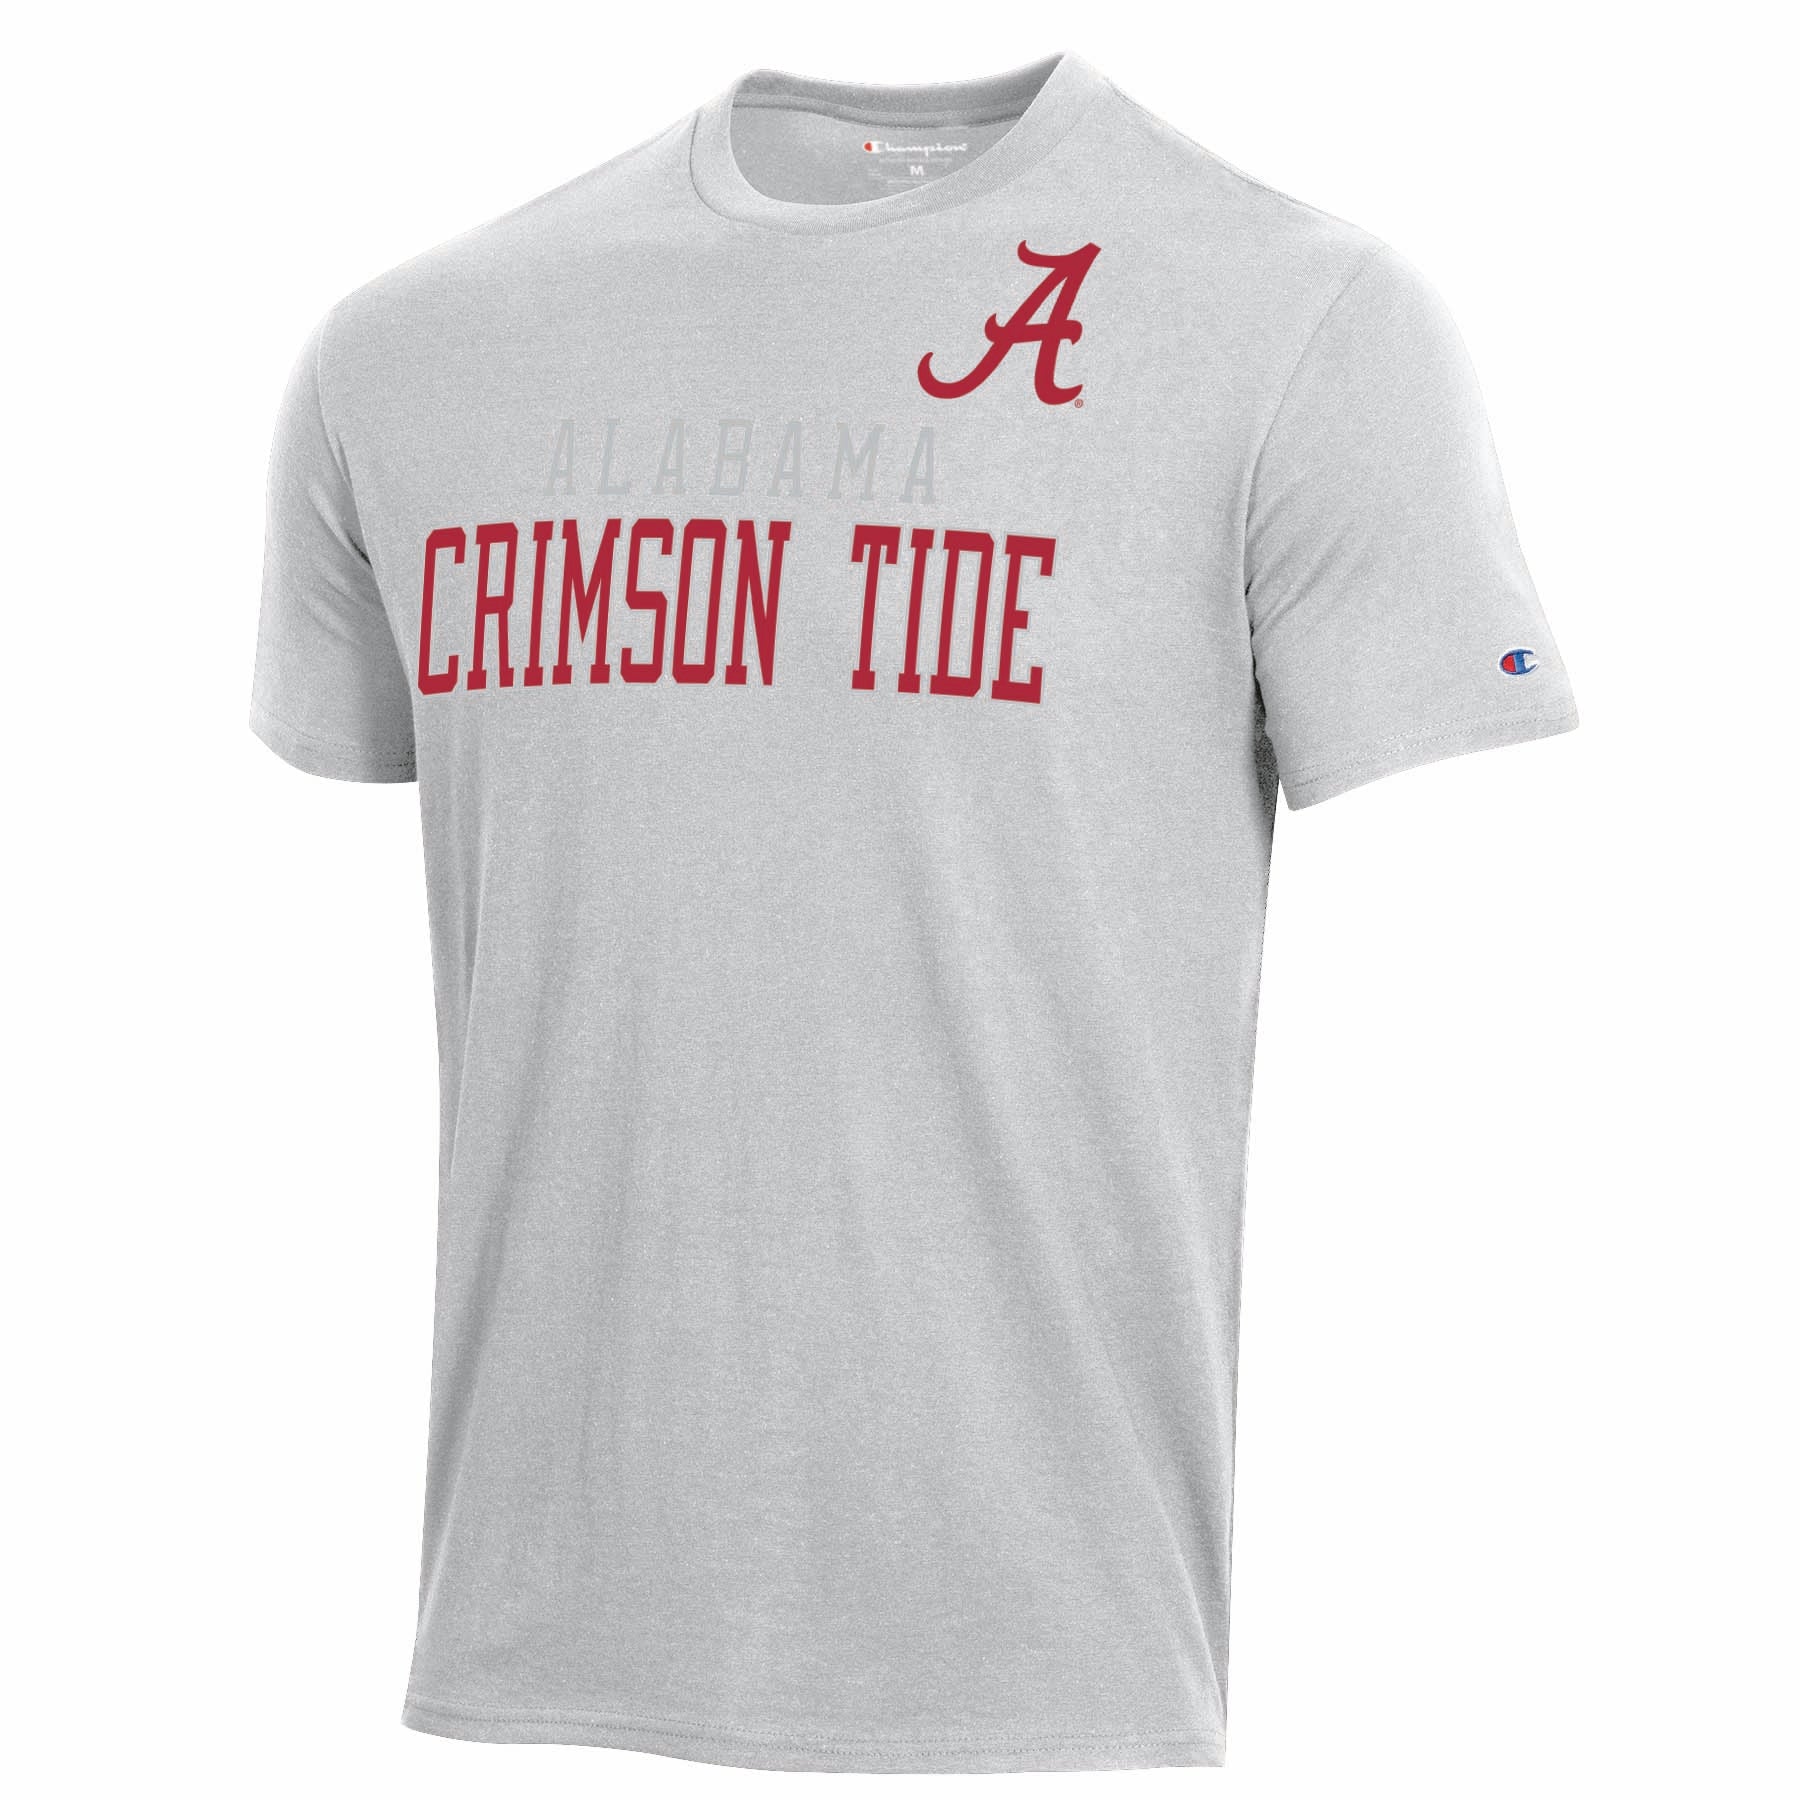 Champion Brand "Alabama" Men's Short Sleeve T